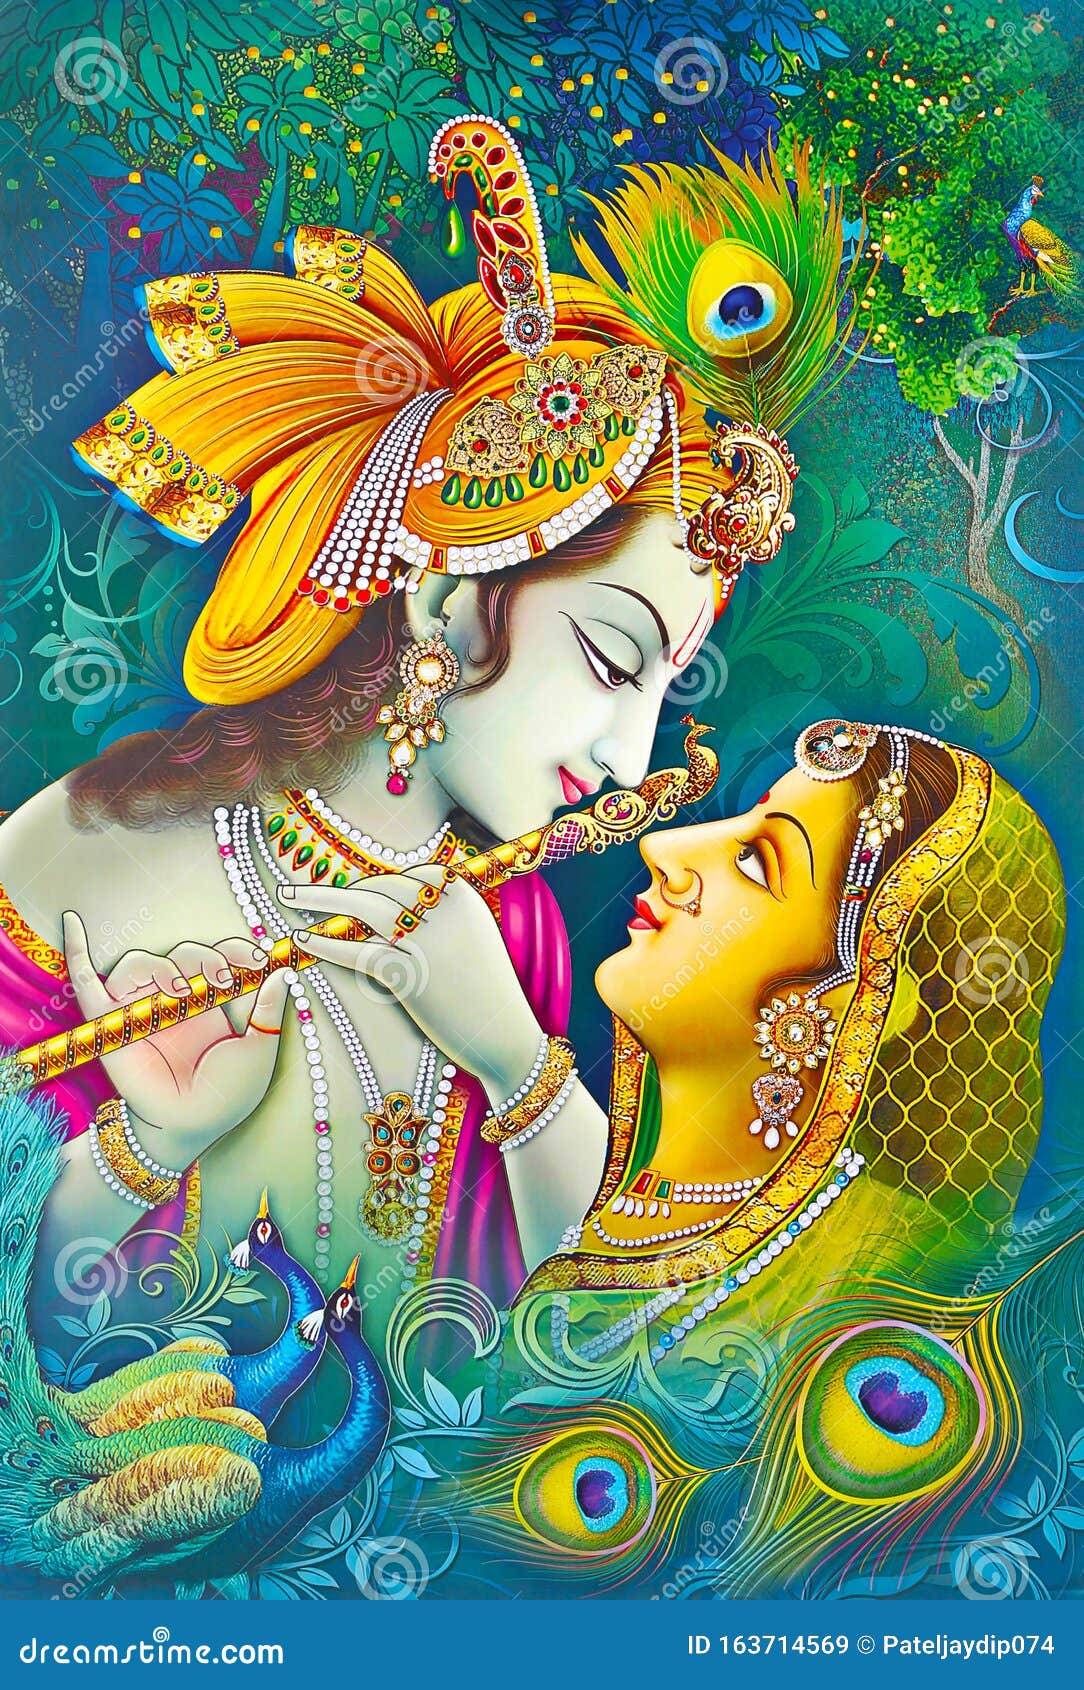 16,643 Krishna Stock Photos - Free & Royalty-Free Stock Photos from  Dreamstime